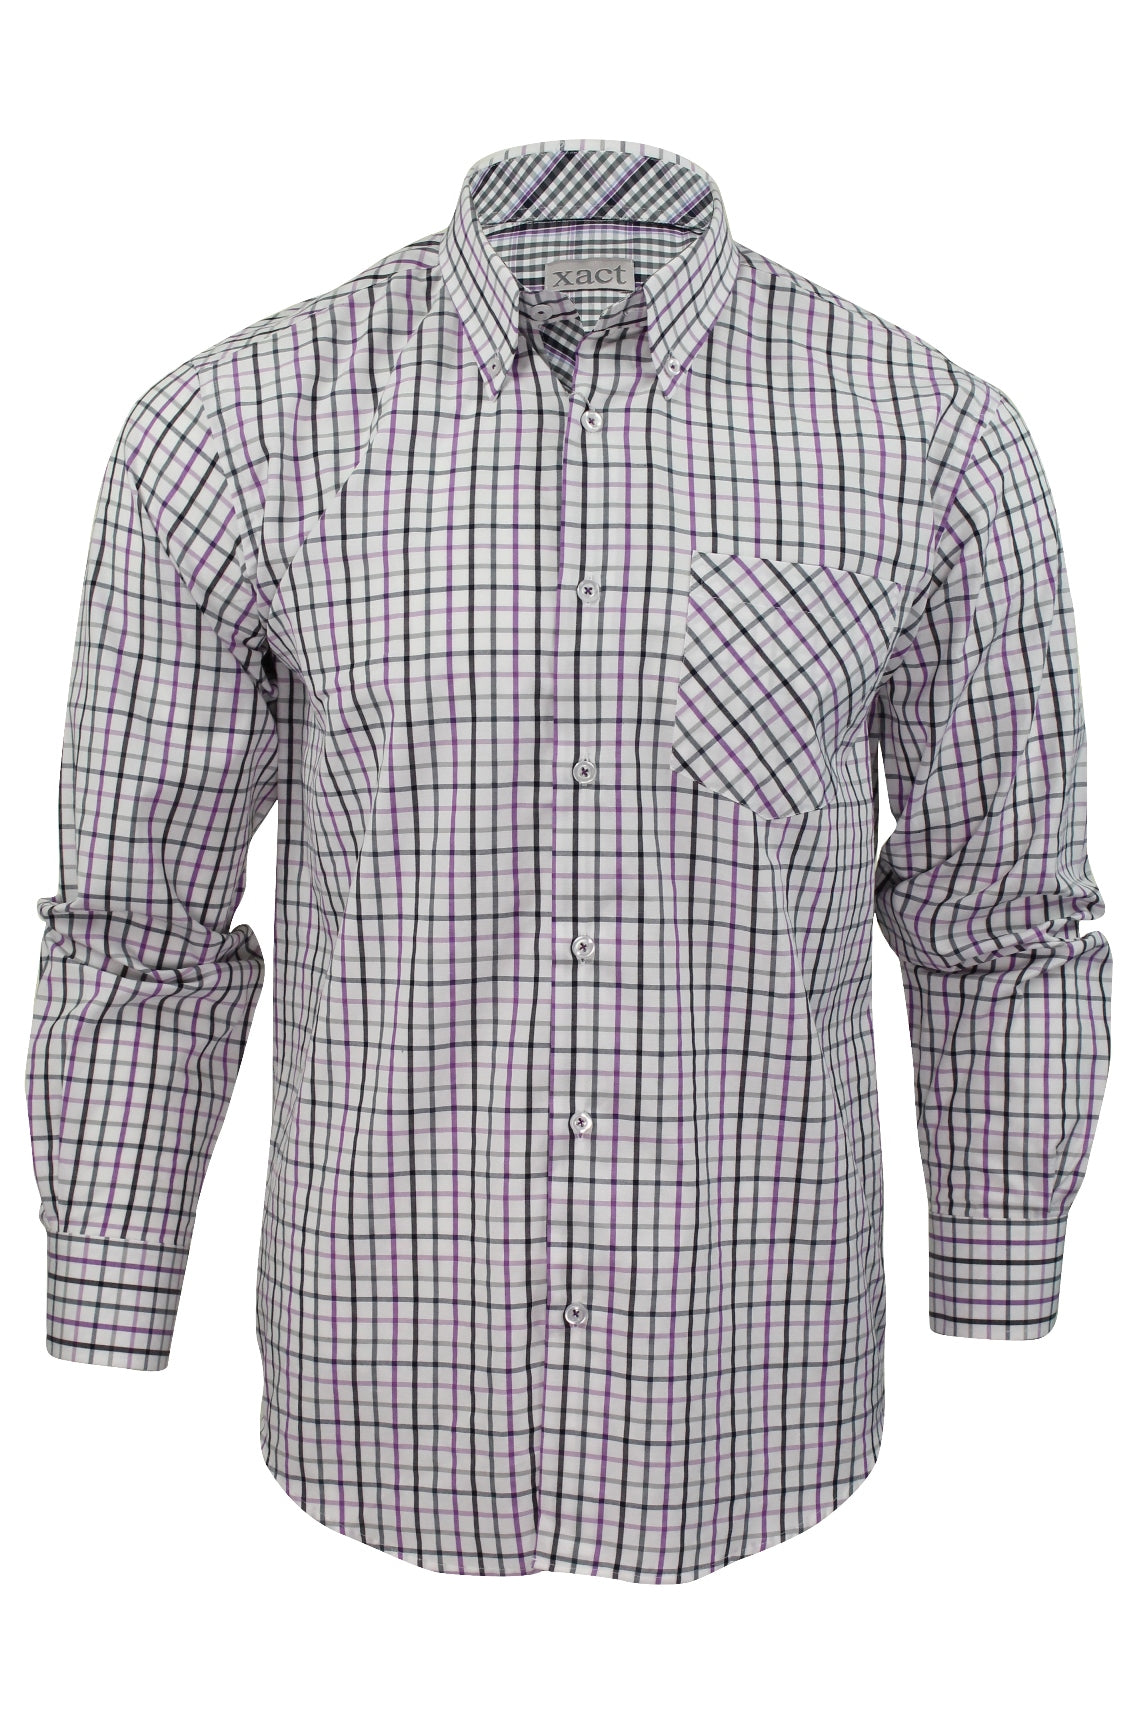 Mens Long Sleeved Check Shirt by Xact Clothing, 01, 1510116